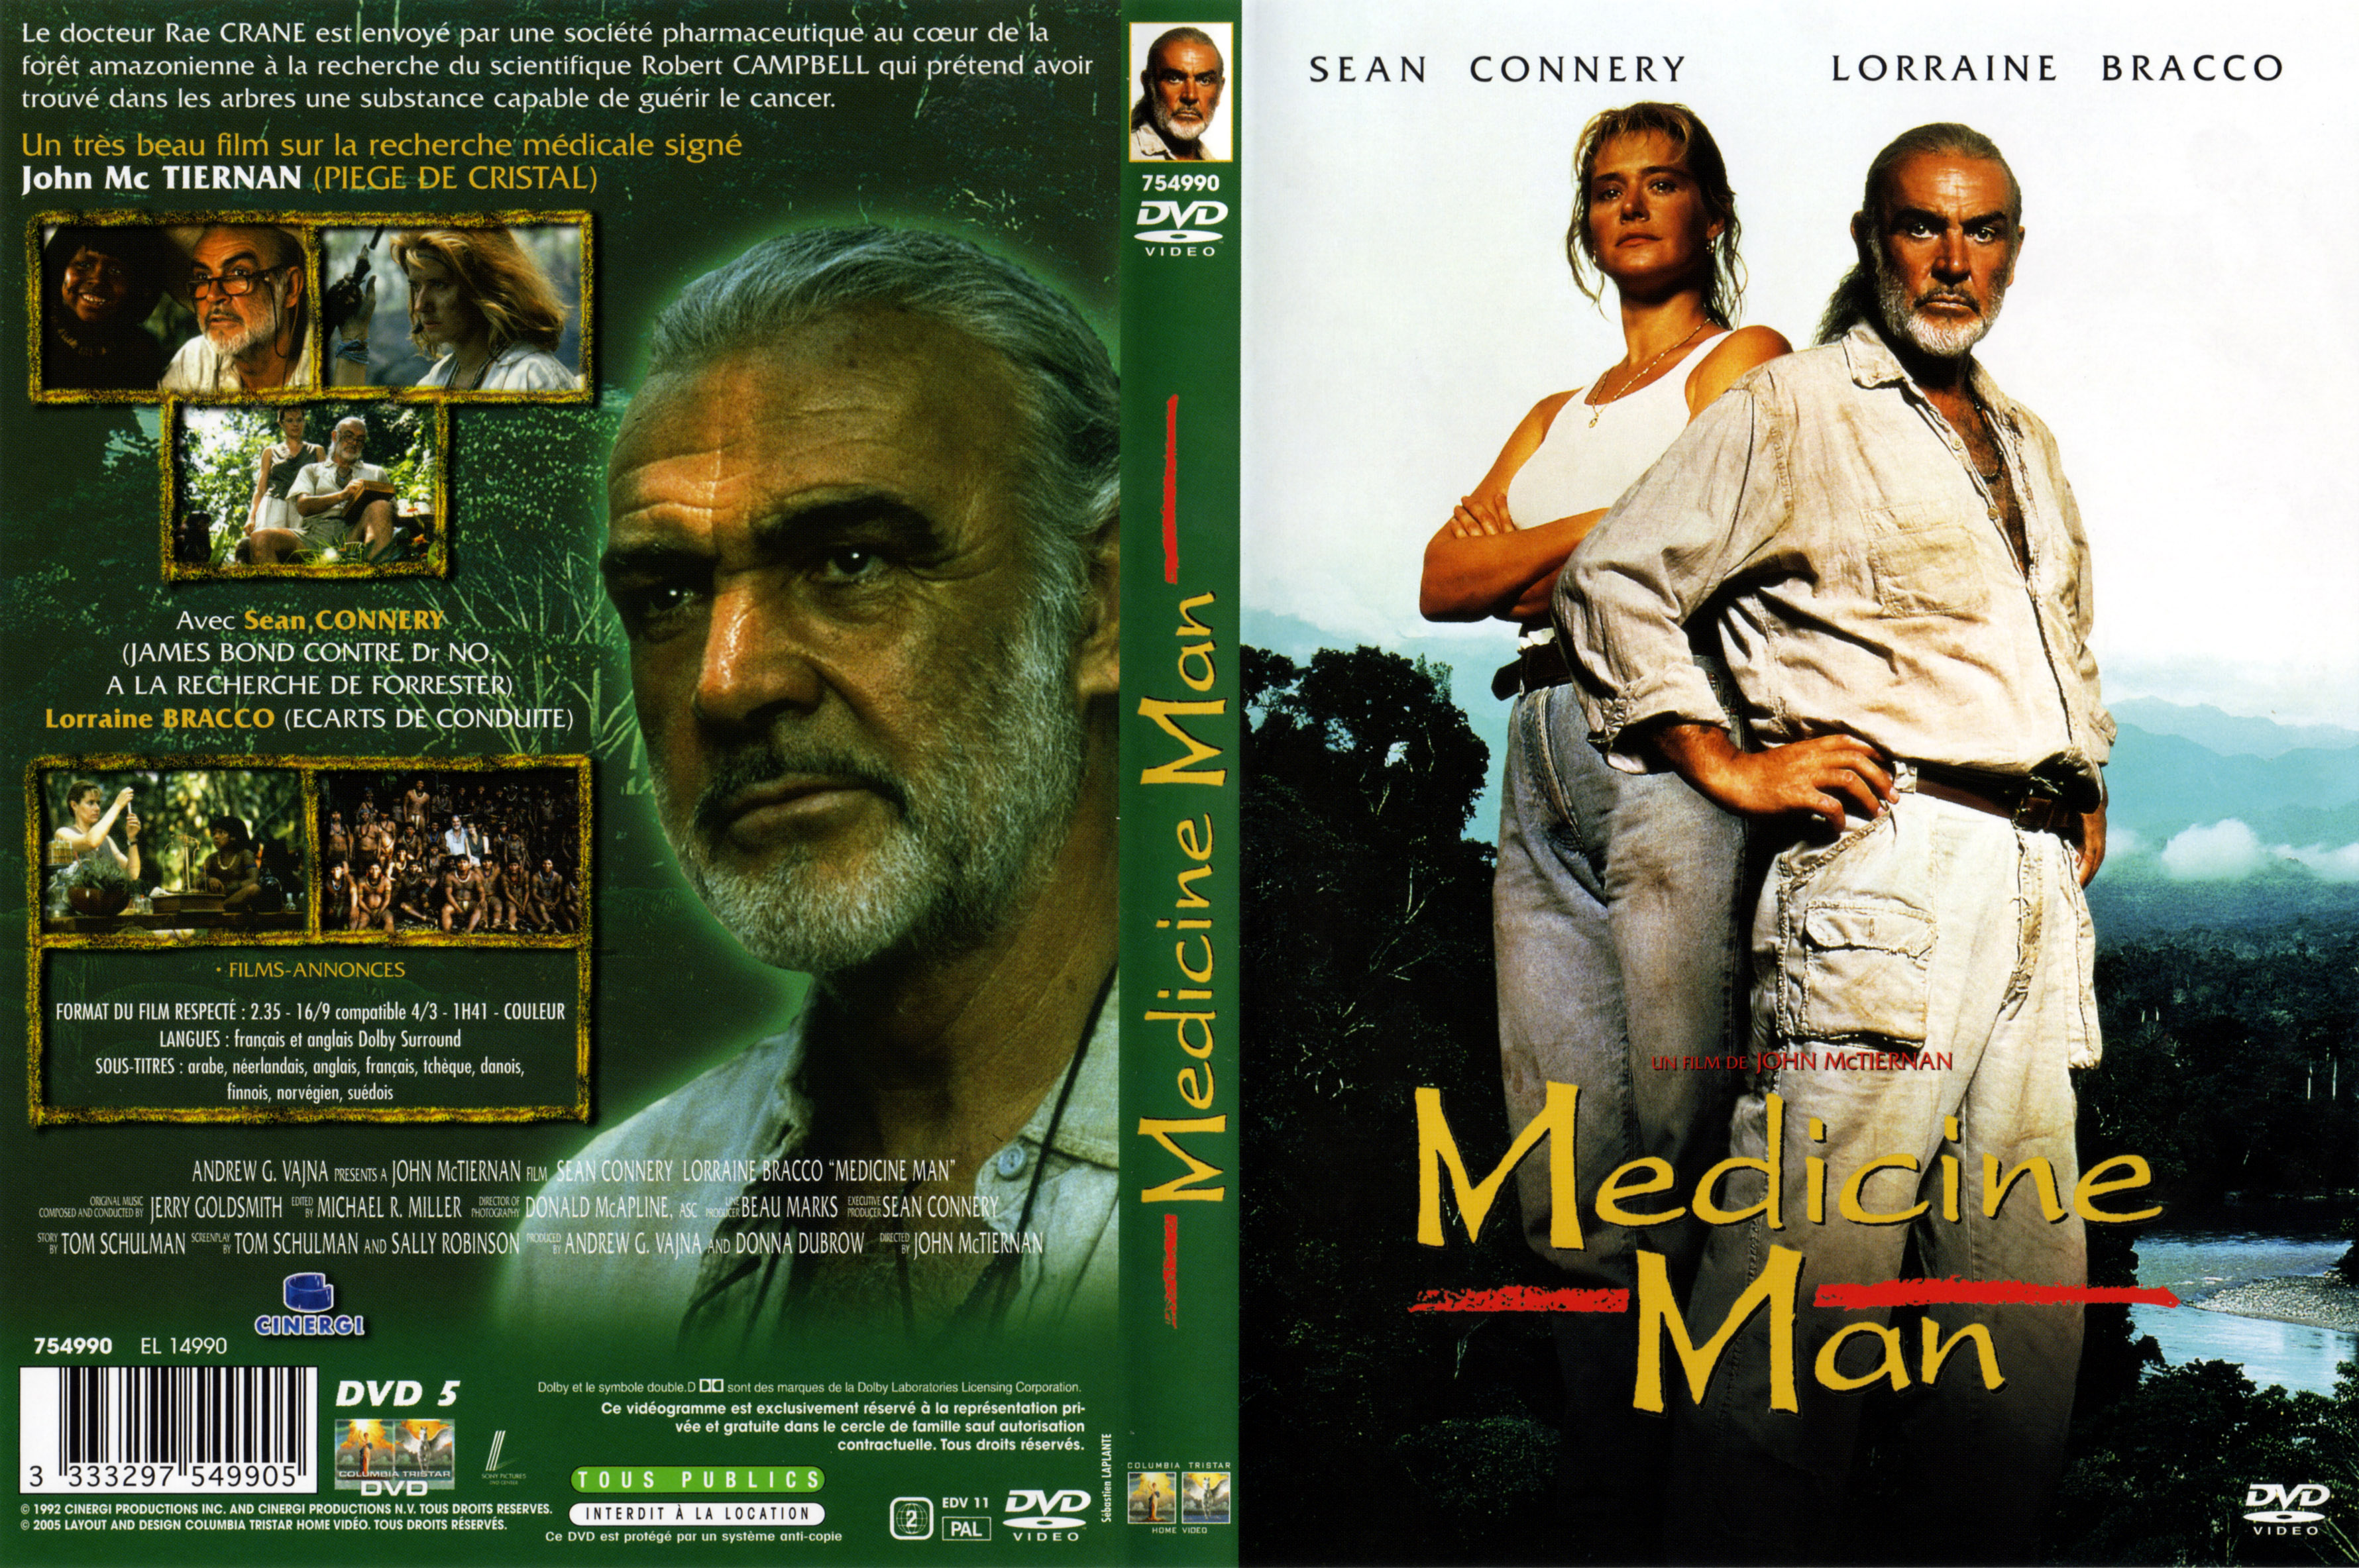 Jaquette DVD Medicine man